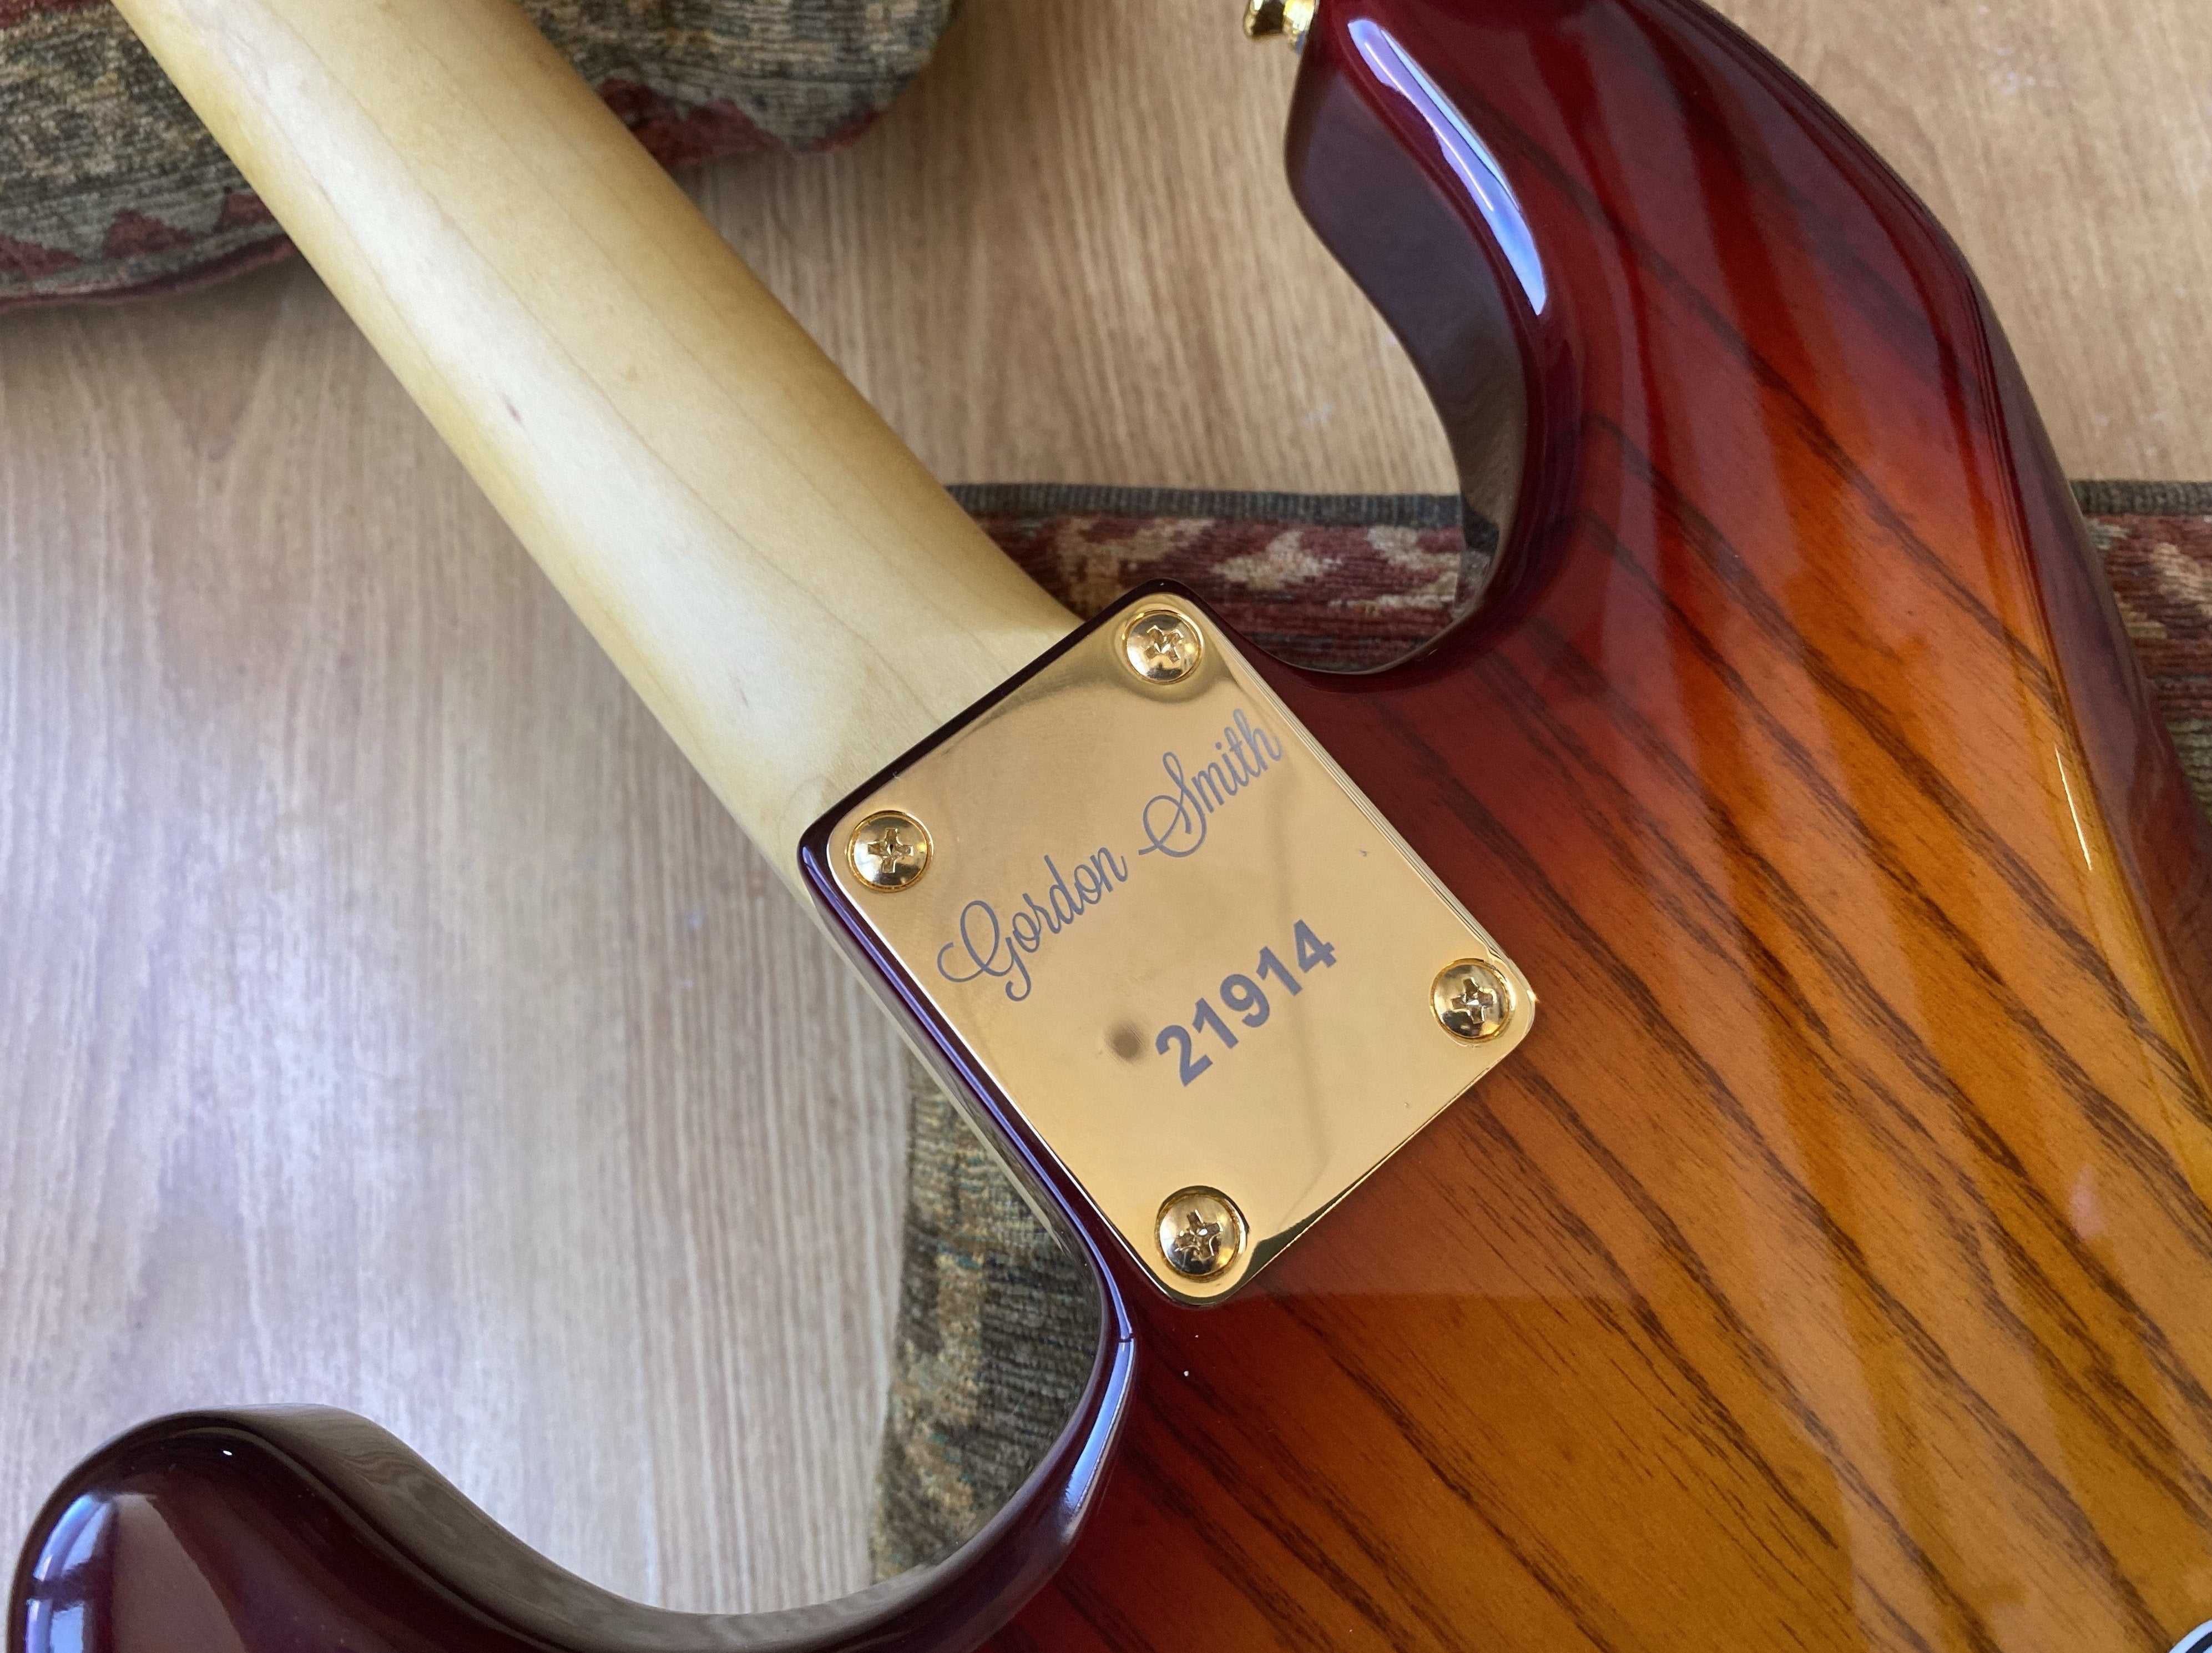 Gordon Smith Classic S Custom Sienna Burst W' Gold Harware, Electric Guitar for sale at Richards Guitars.